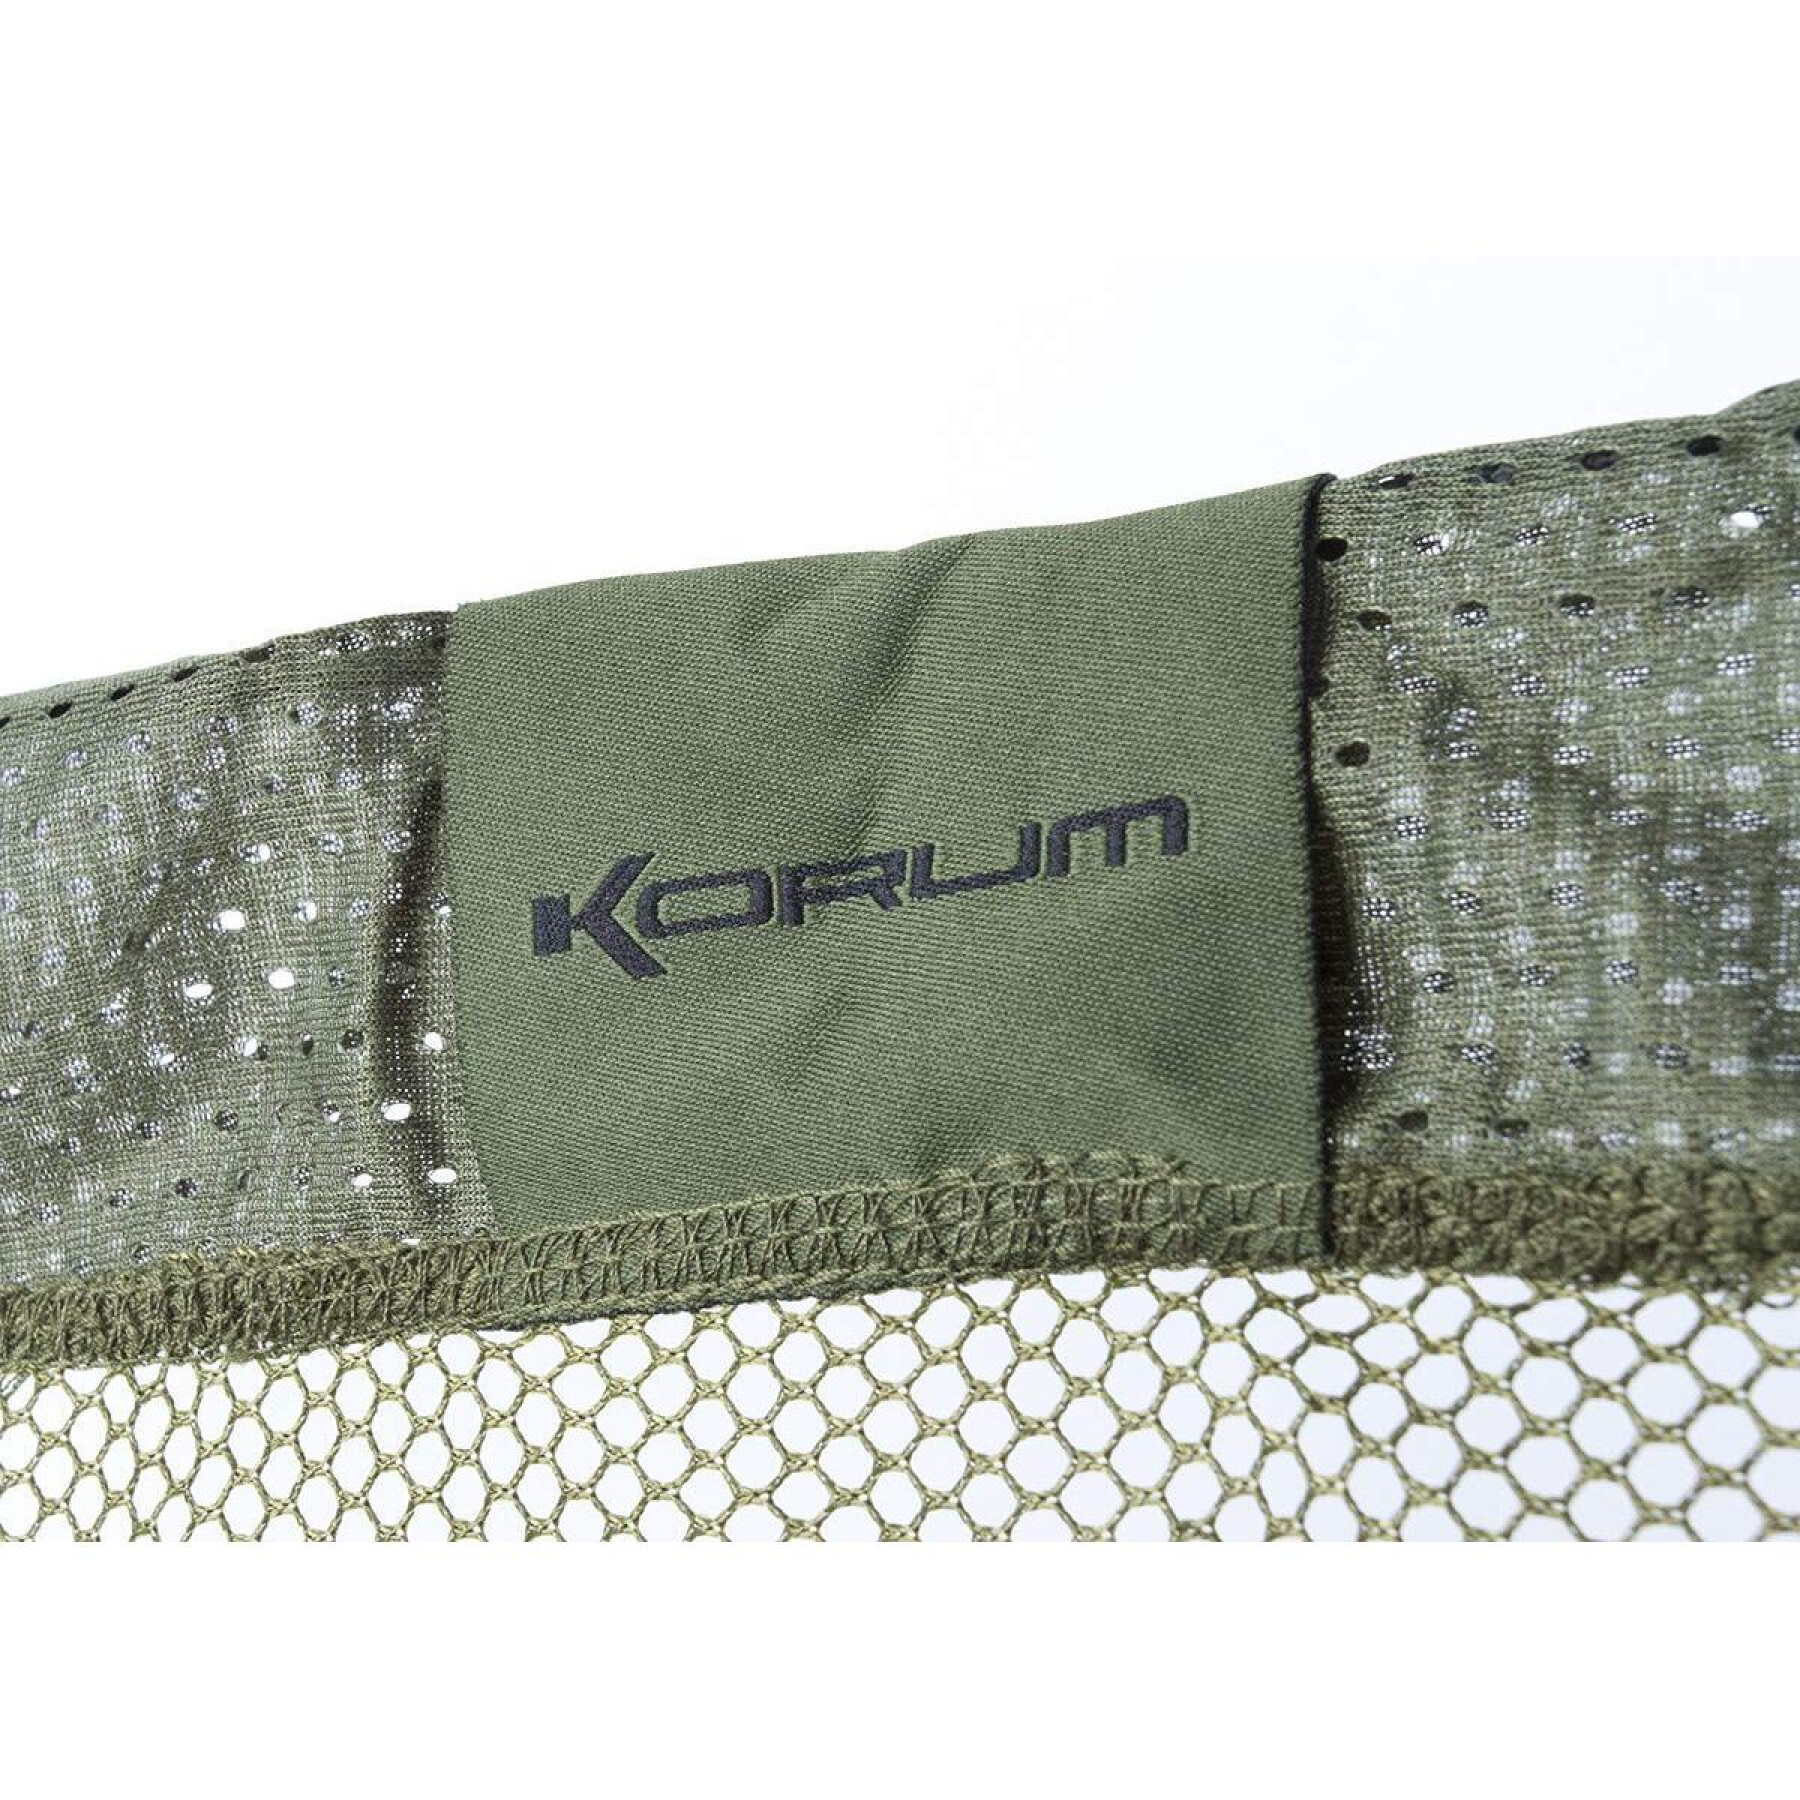 Fishnet Korum Power Combo 1.8m – 2 brins